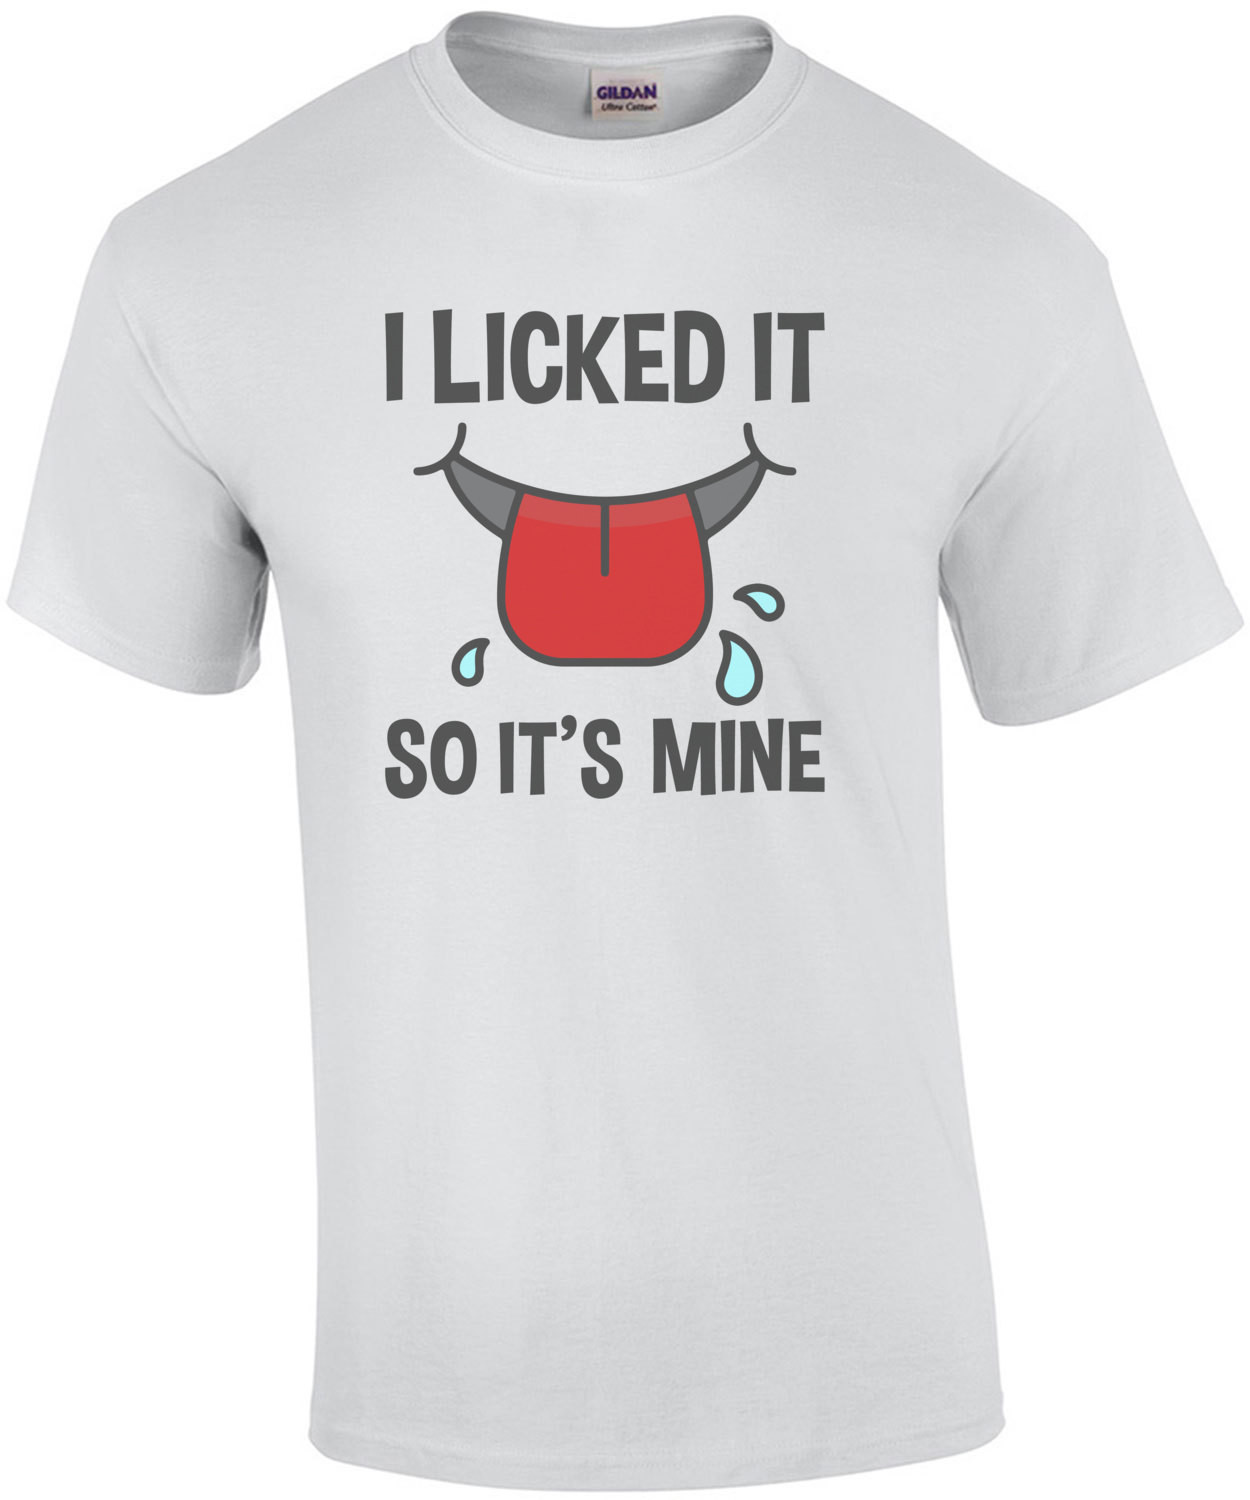 I licked it so it's mine - funny t-shirt